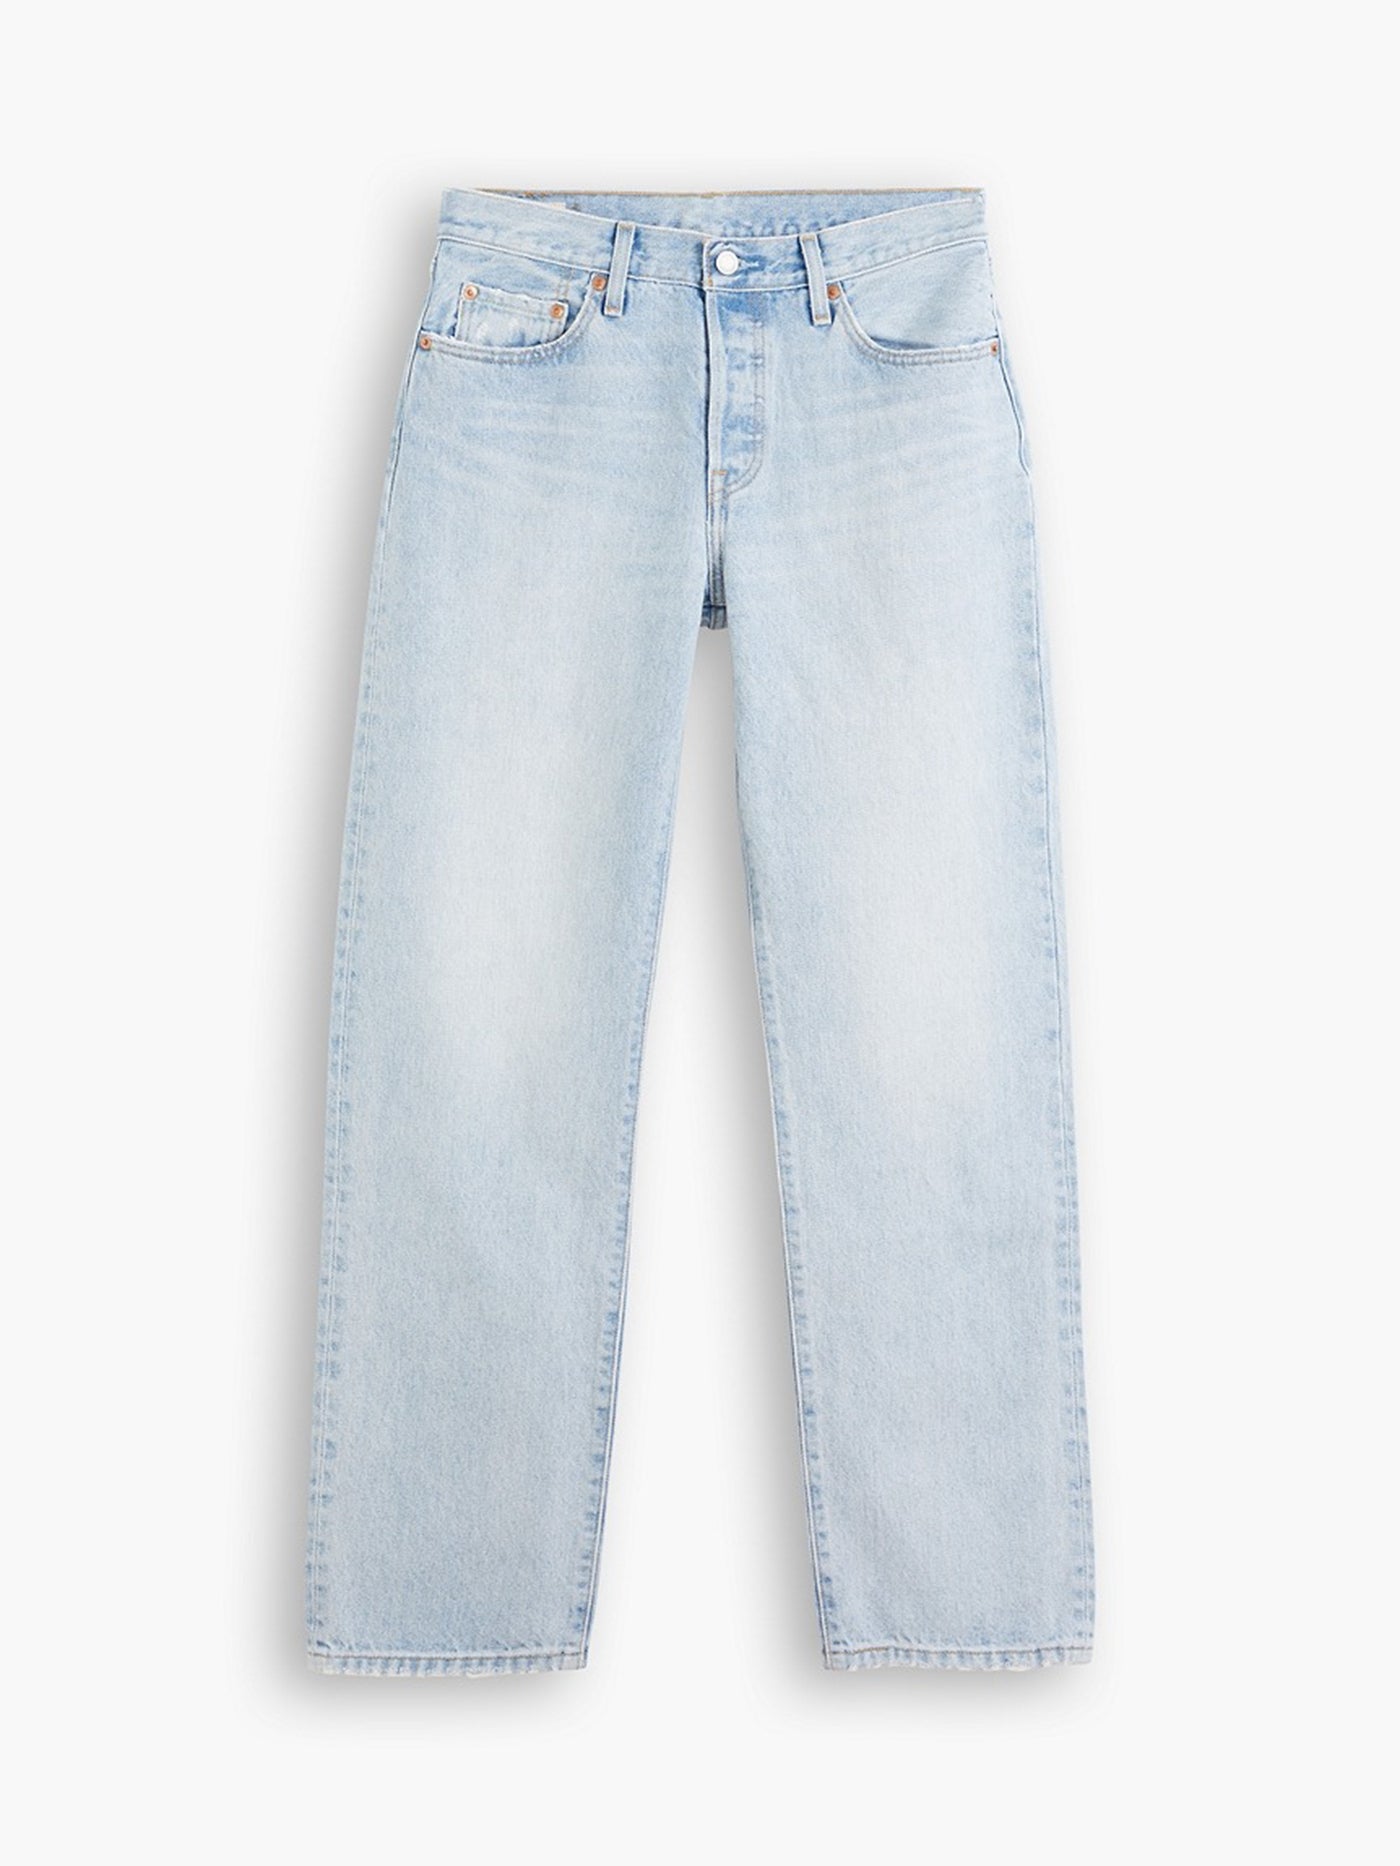 Levi's 501 90's Light Indigo Worn In Jeans | EMPIRE